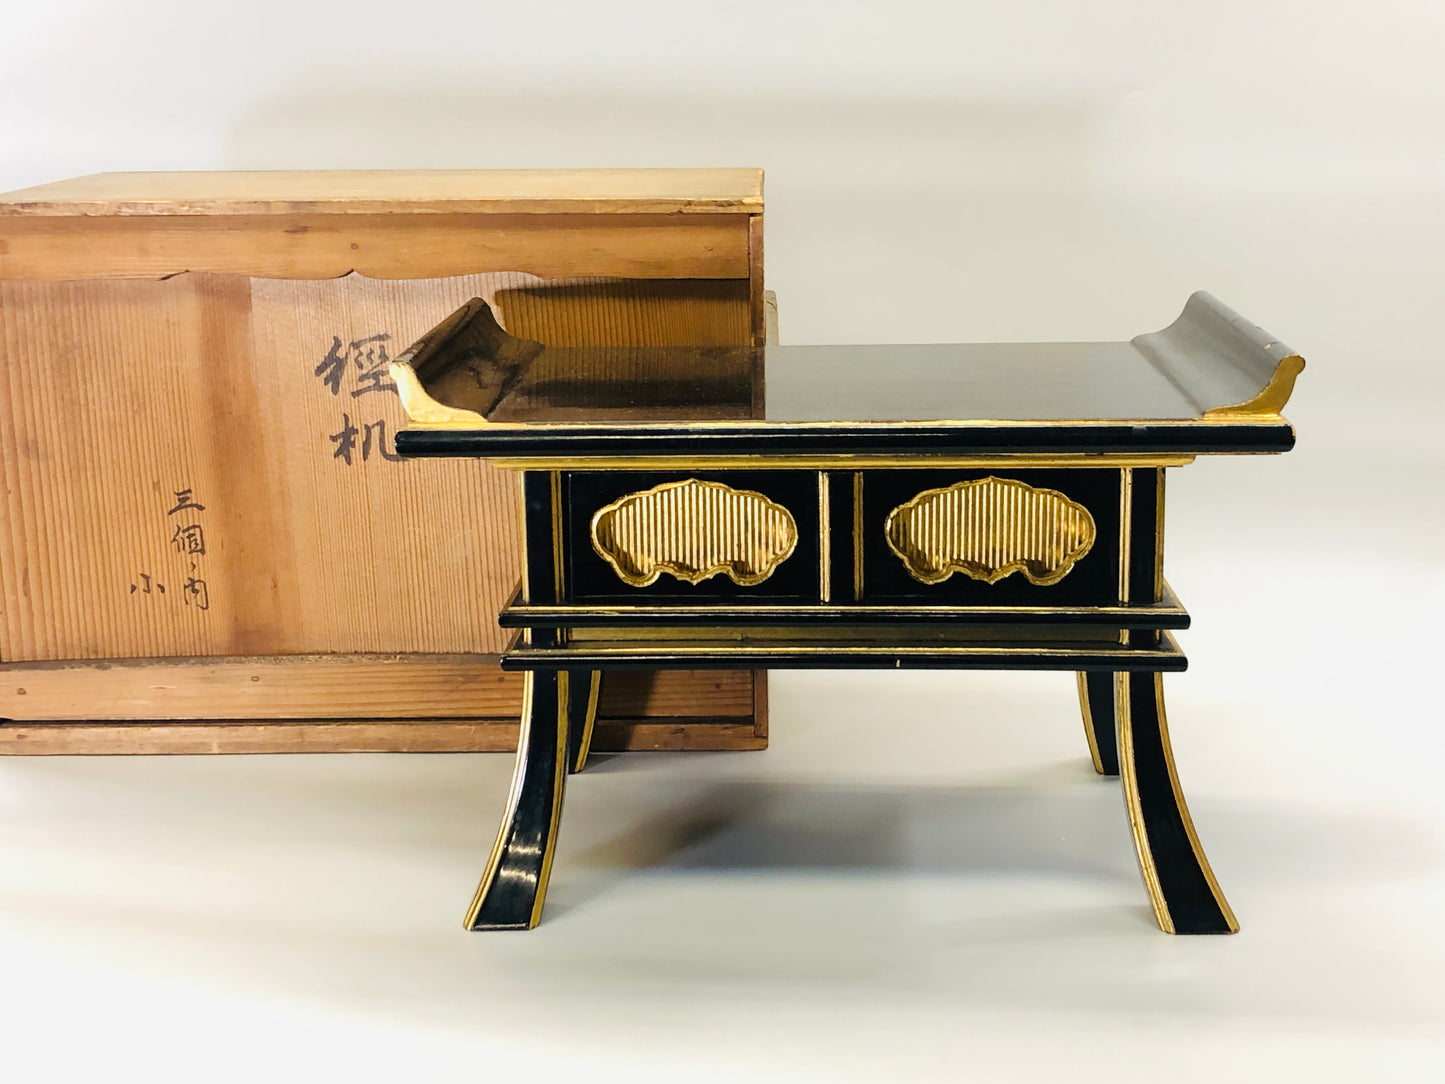 Y5324 Buddhist Altar Equipment Sutra desk black lacquer Japan Buddhism antique